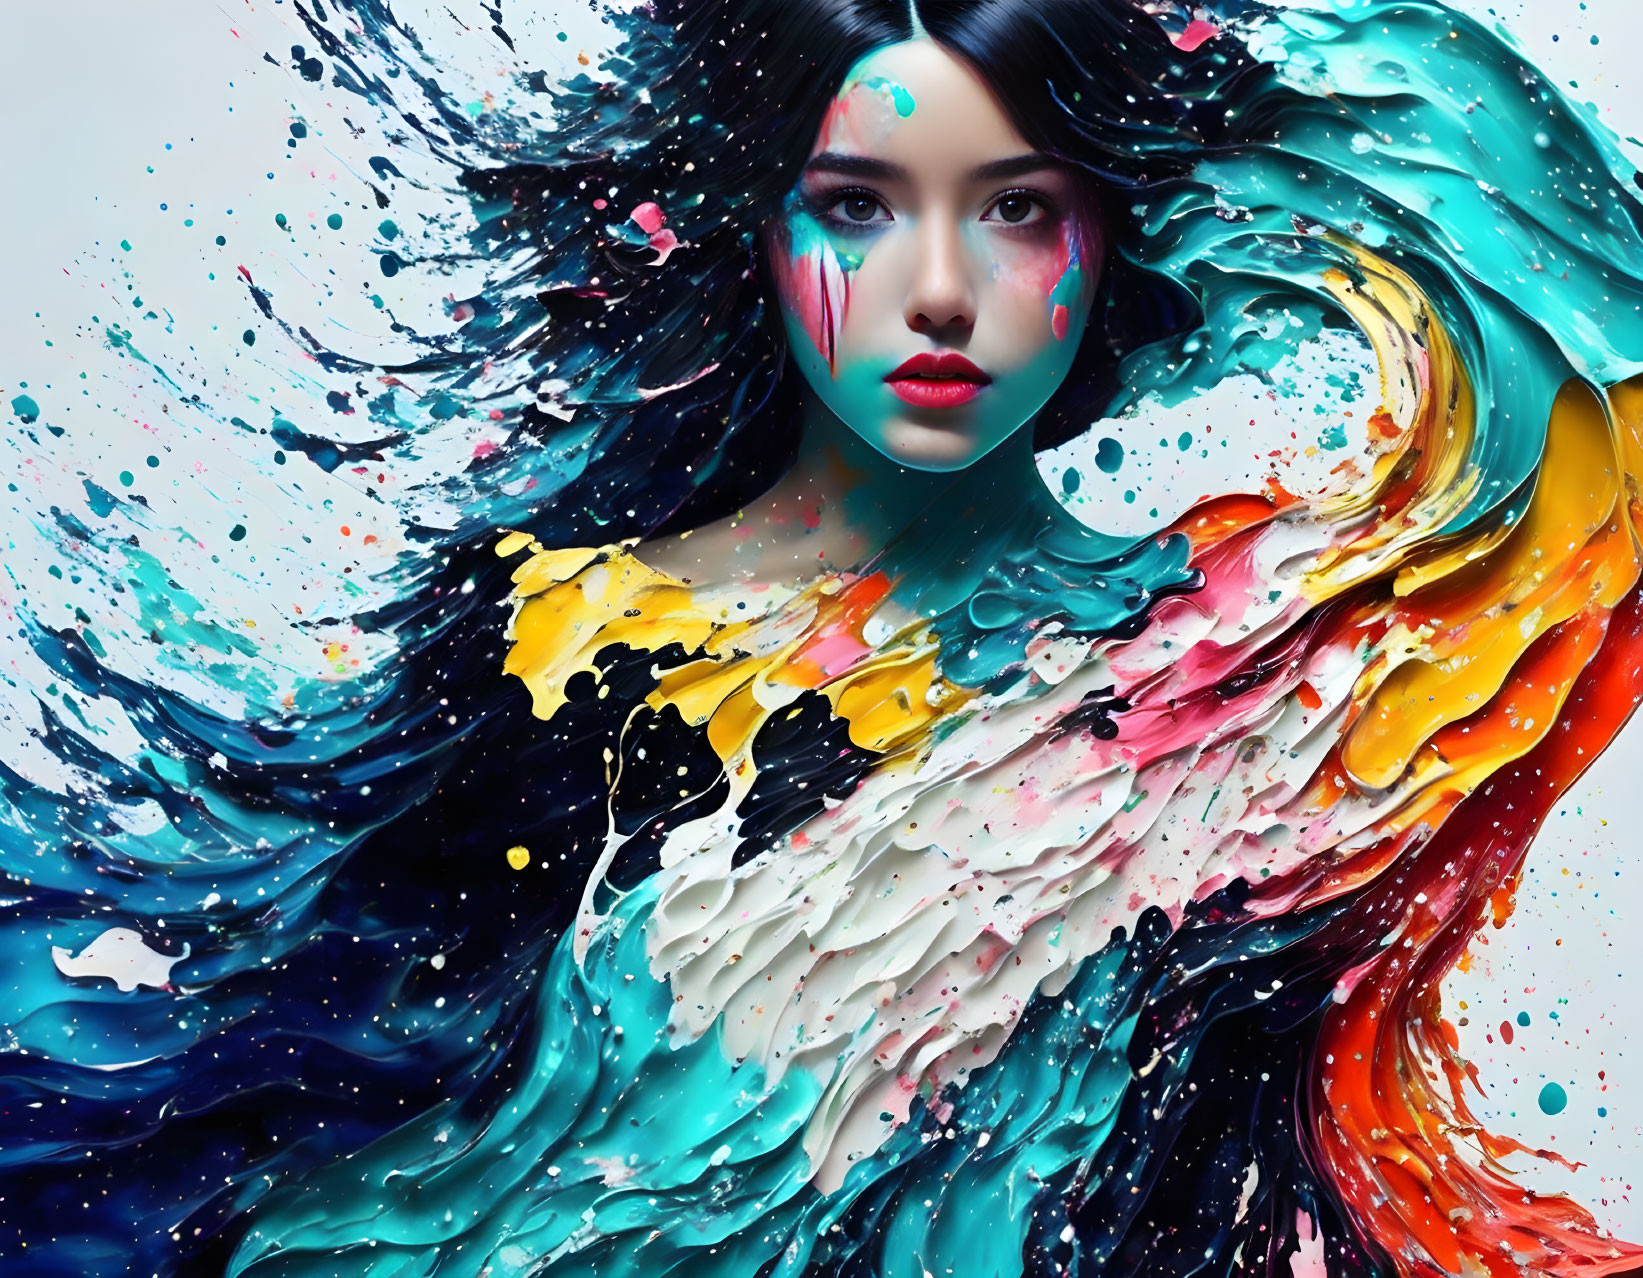 Portrait of Woman Surrounded by Multicolored Paint Splash